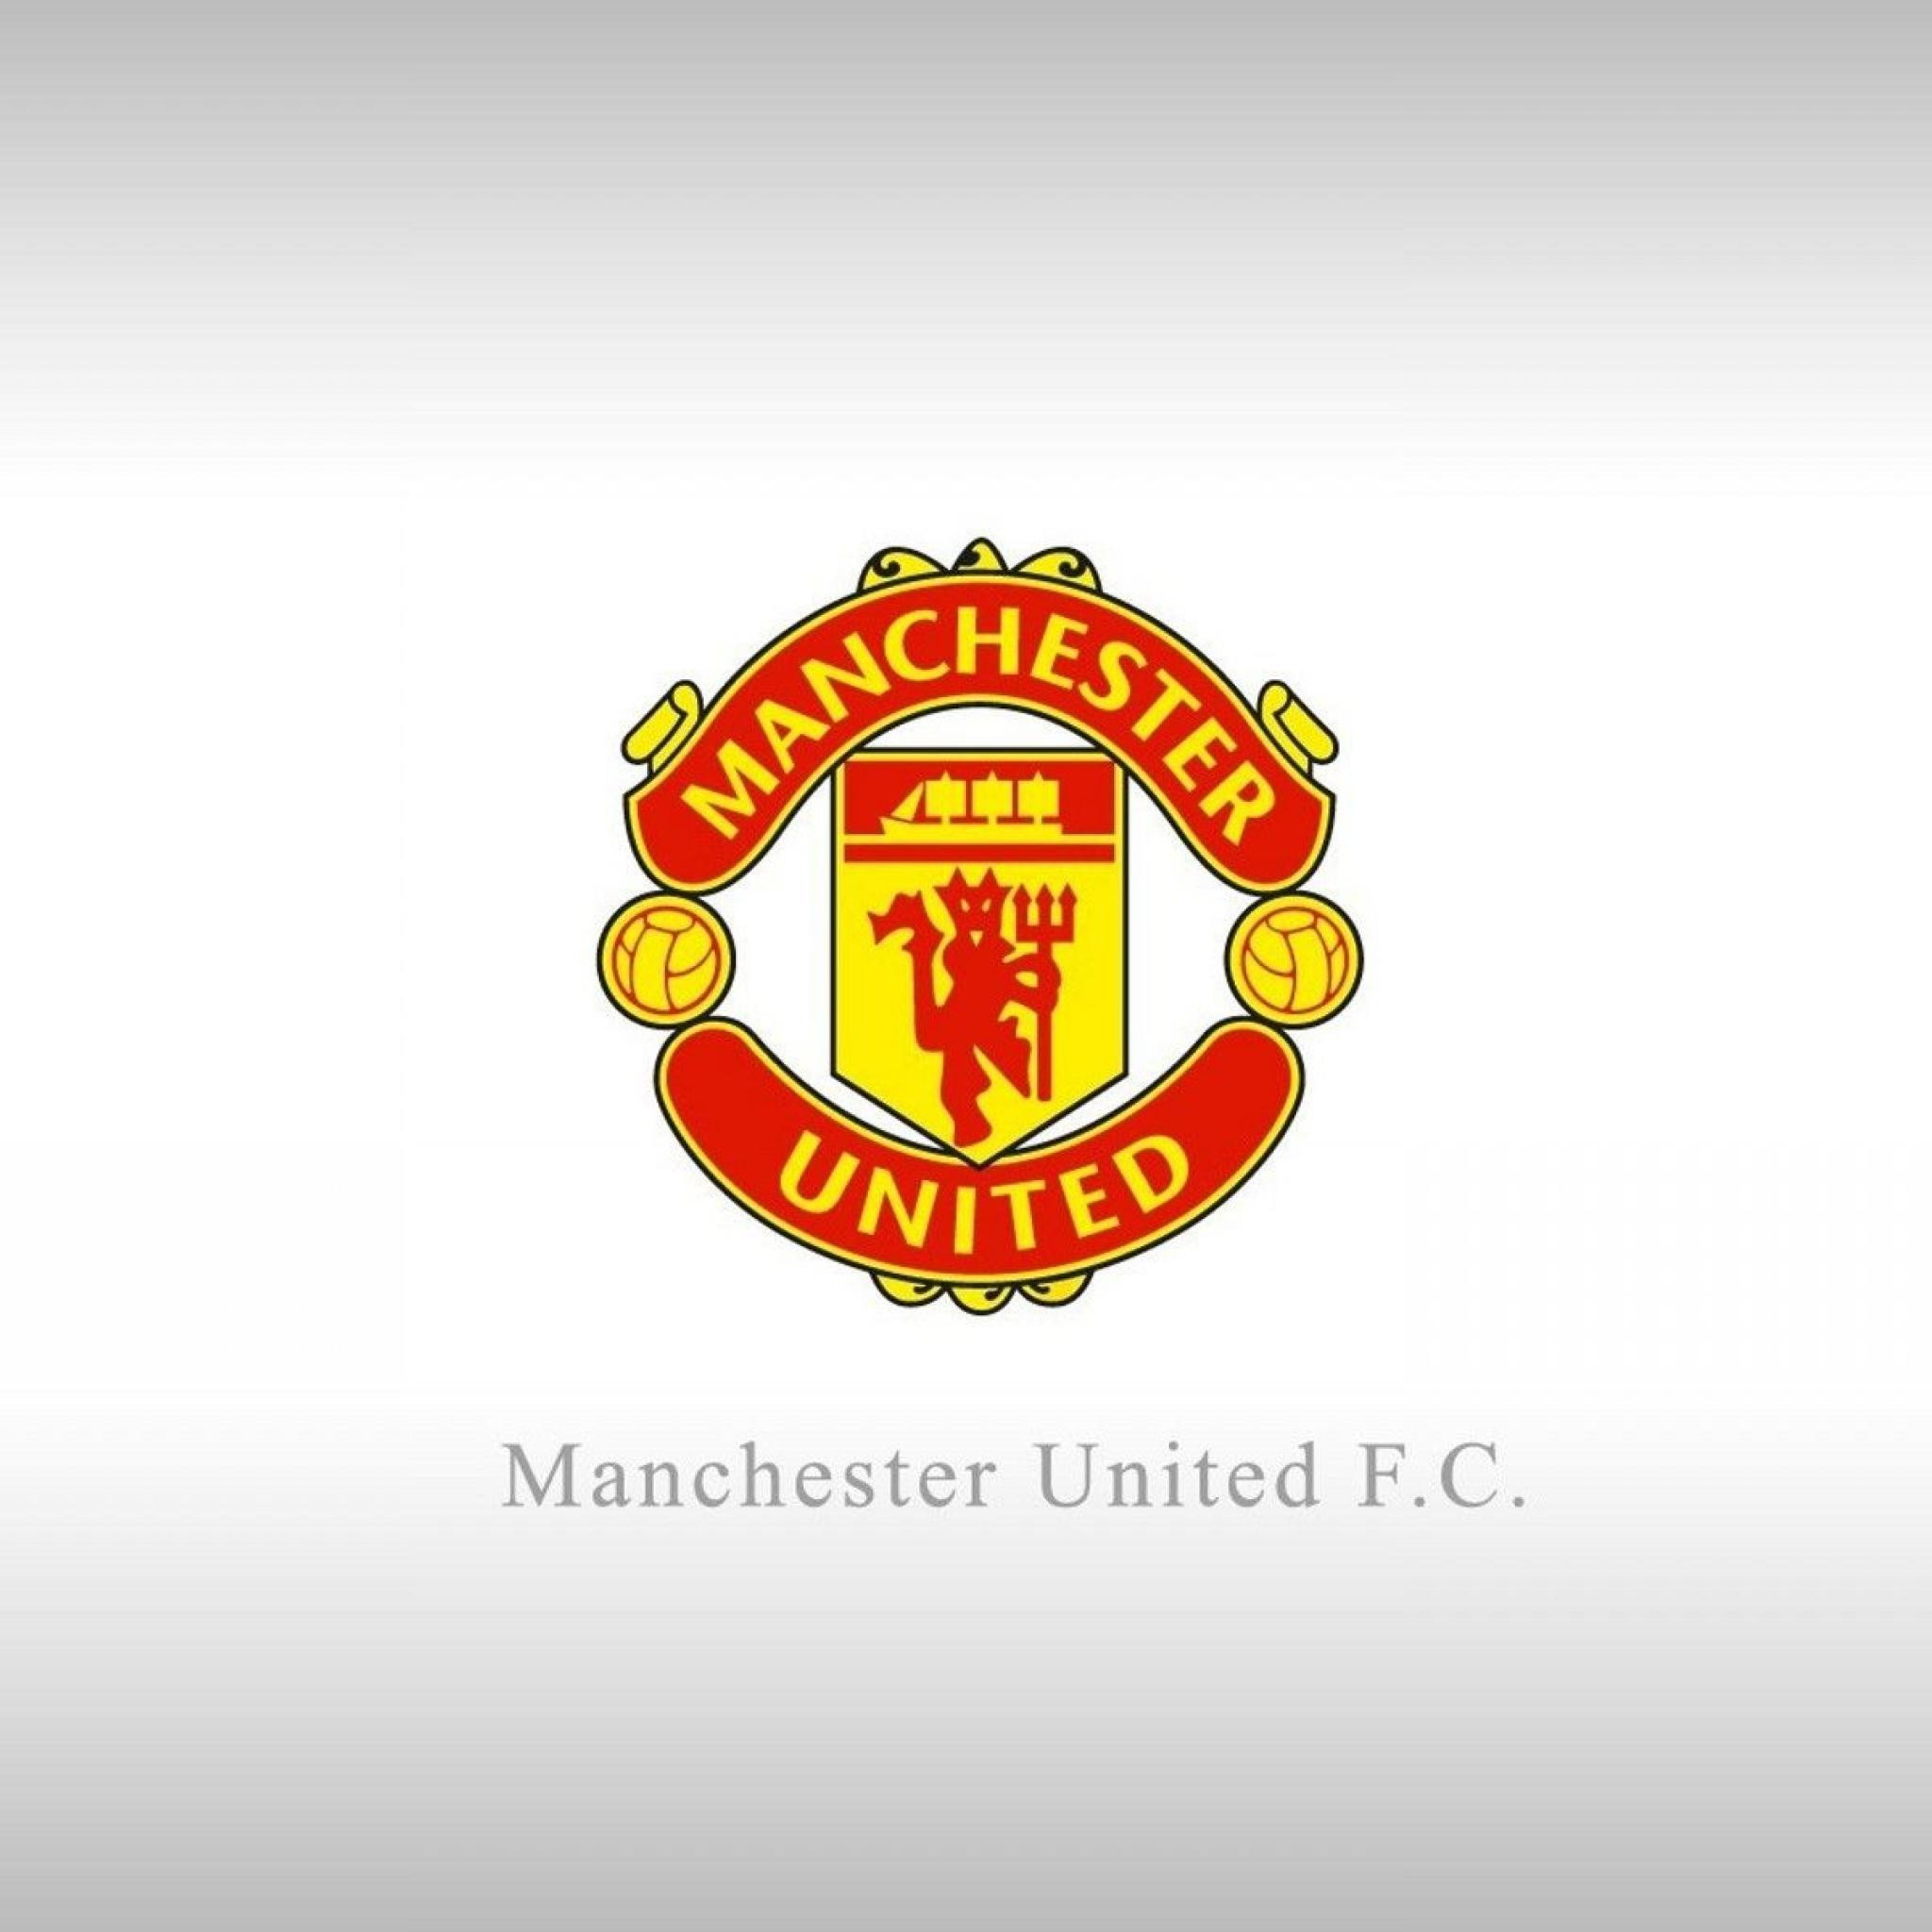 manchester united logo wallpaper descarga gratuita,emblema,cresta,insignia,fuente,gráficos